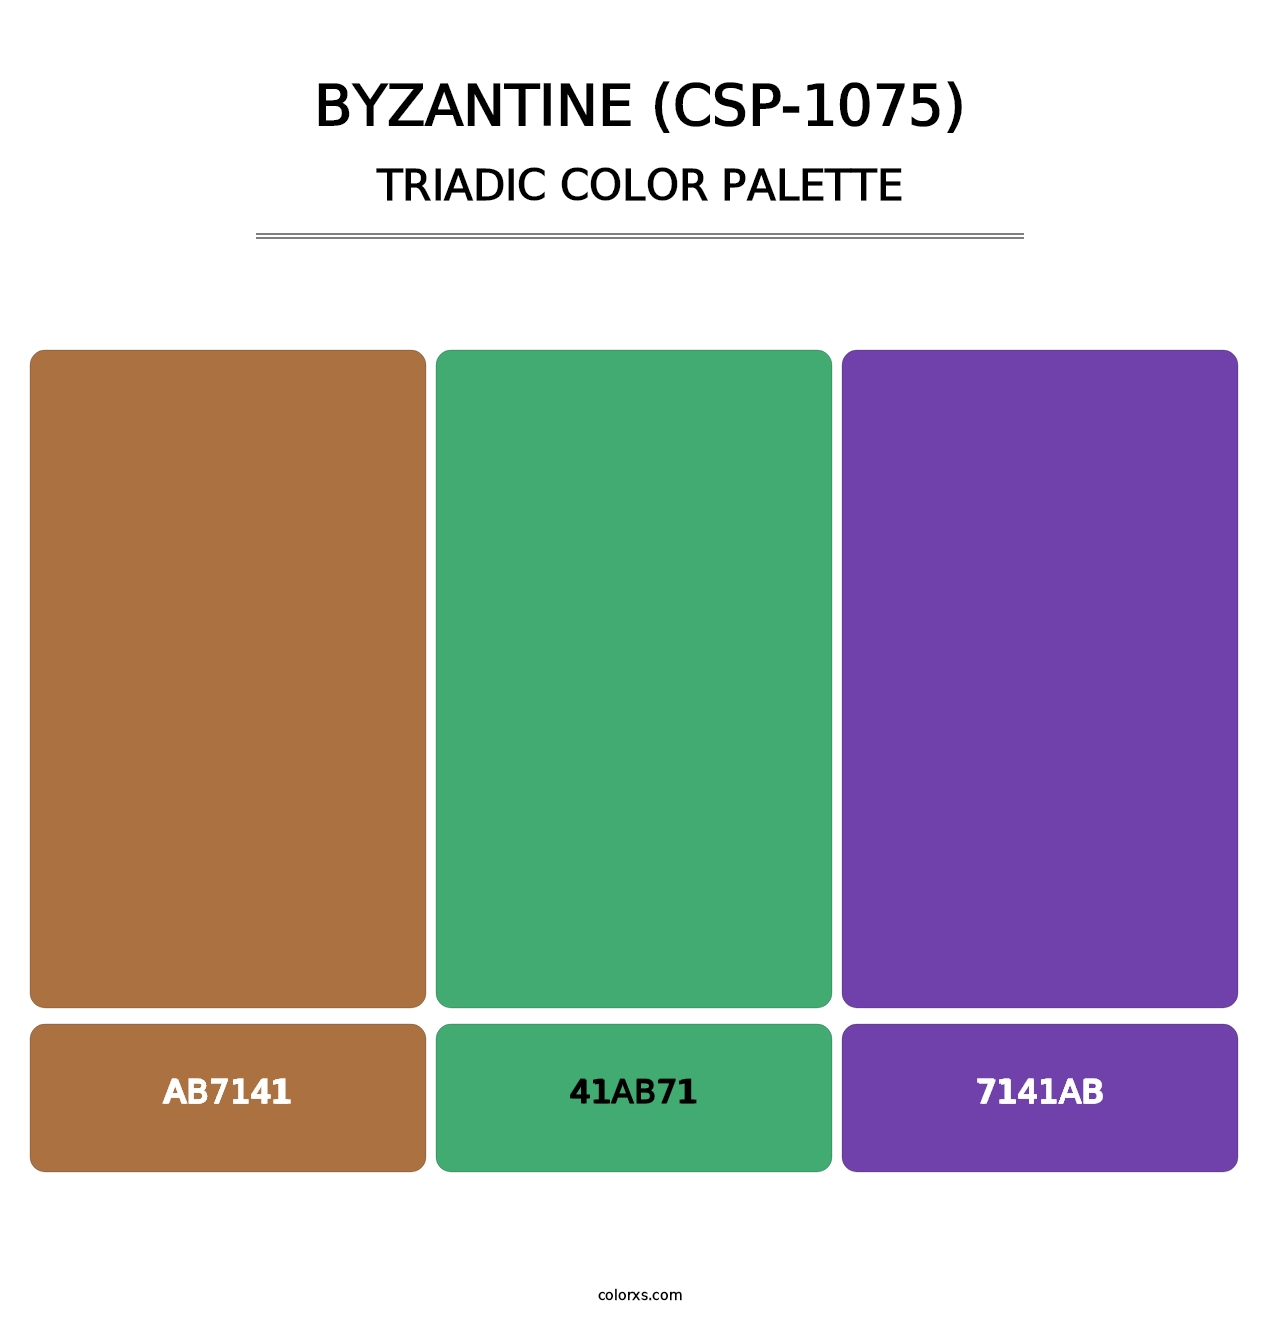 Byzantine (CSP-1075) - Triadic Color Palette